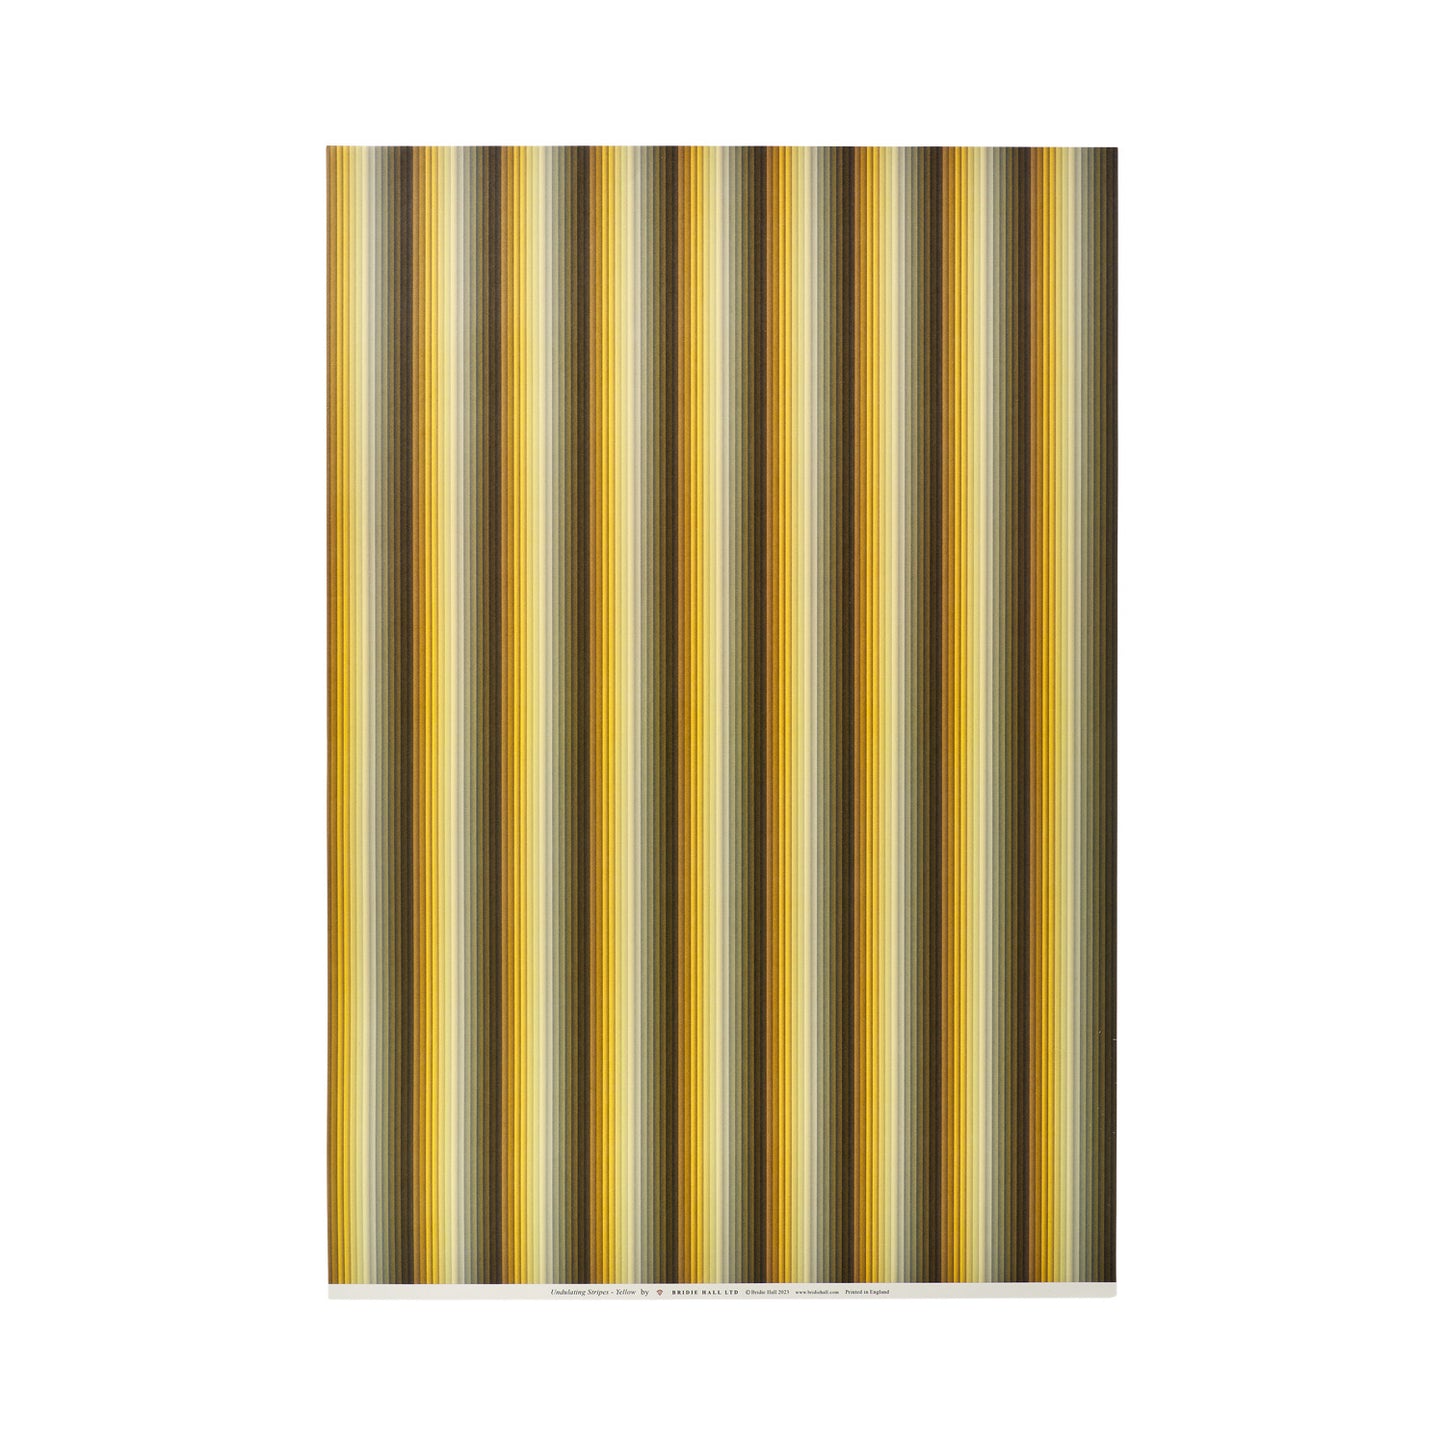 Undulating Stripes - Yellow